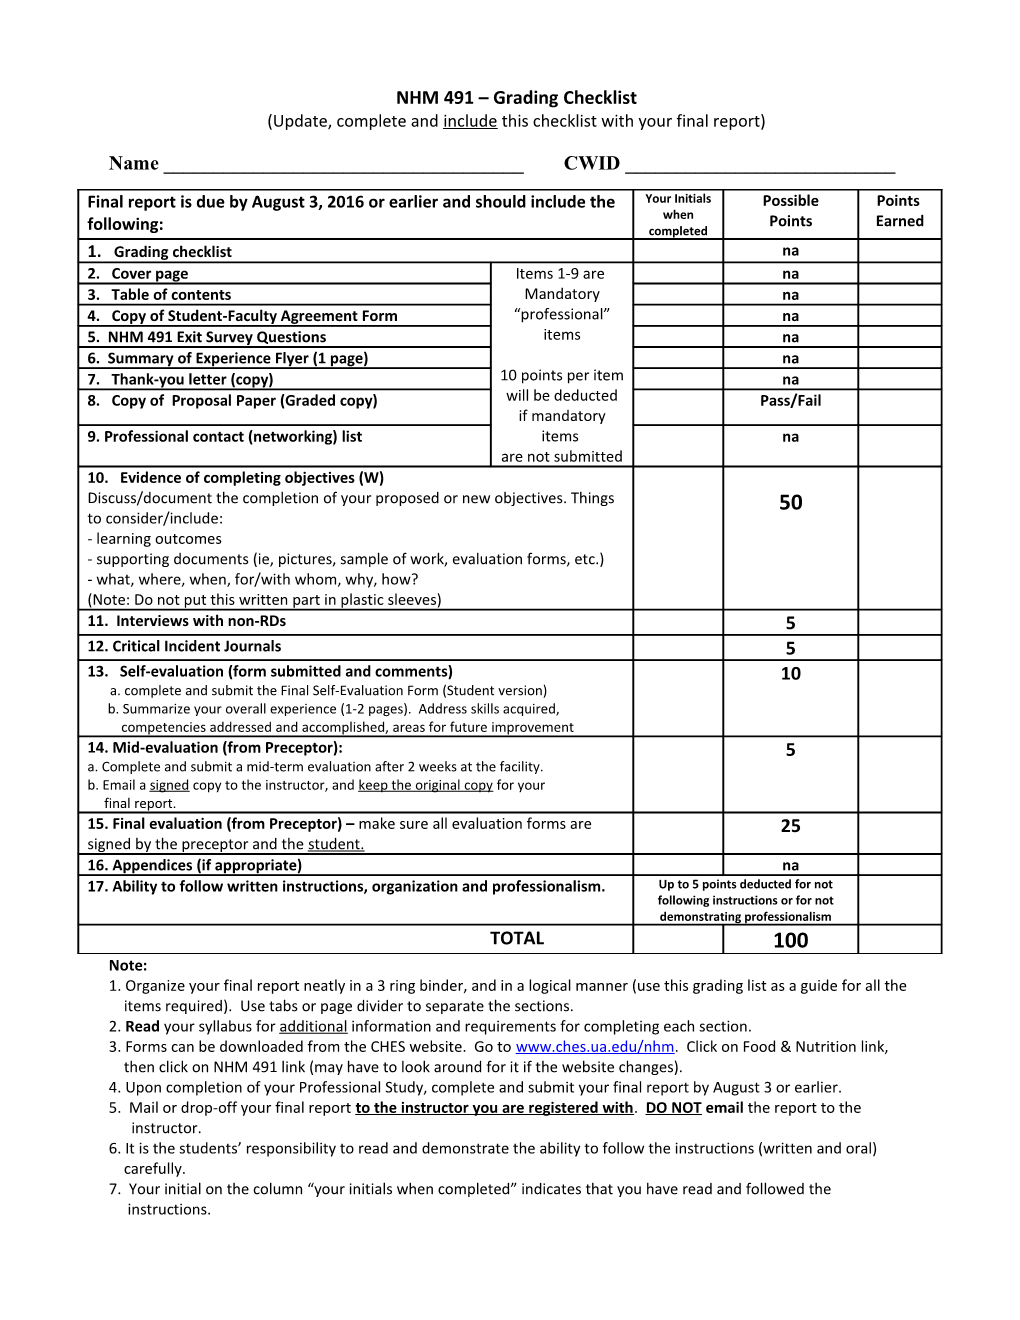 NHM 491 Grading Checklist